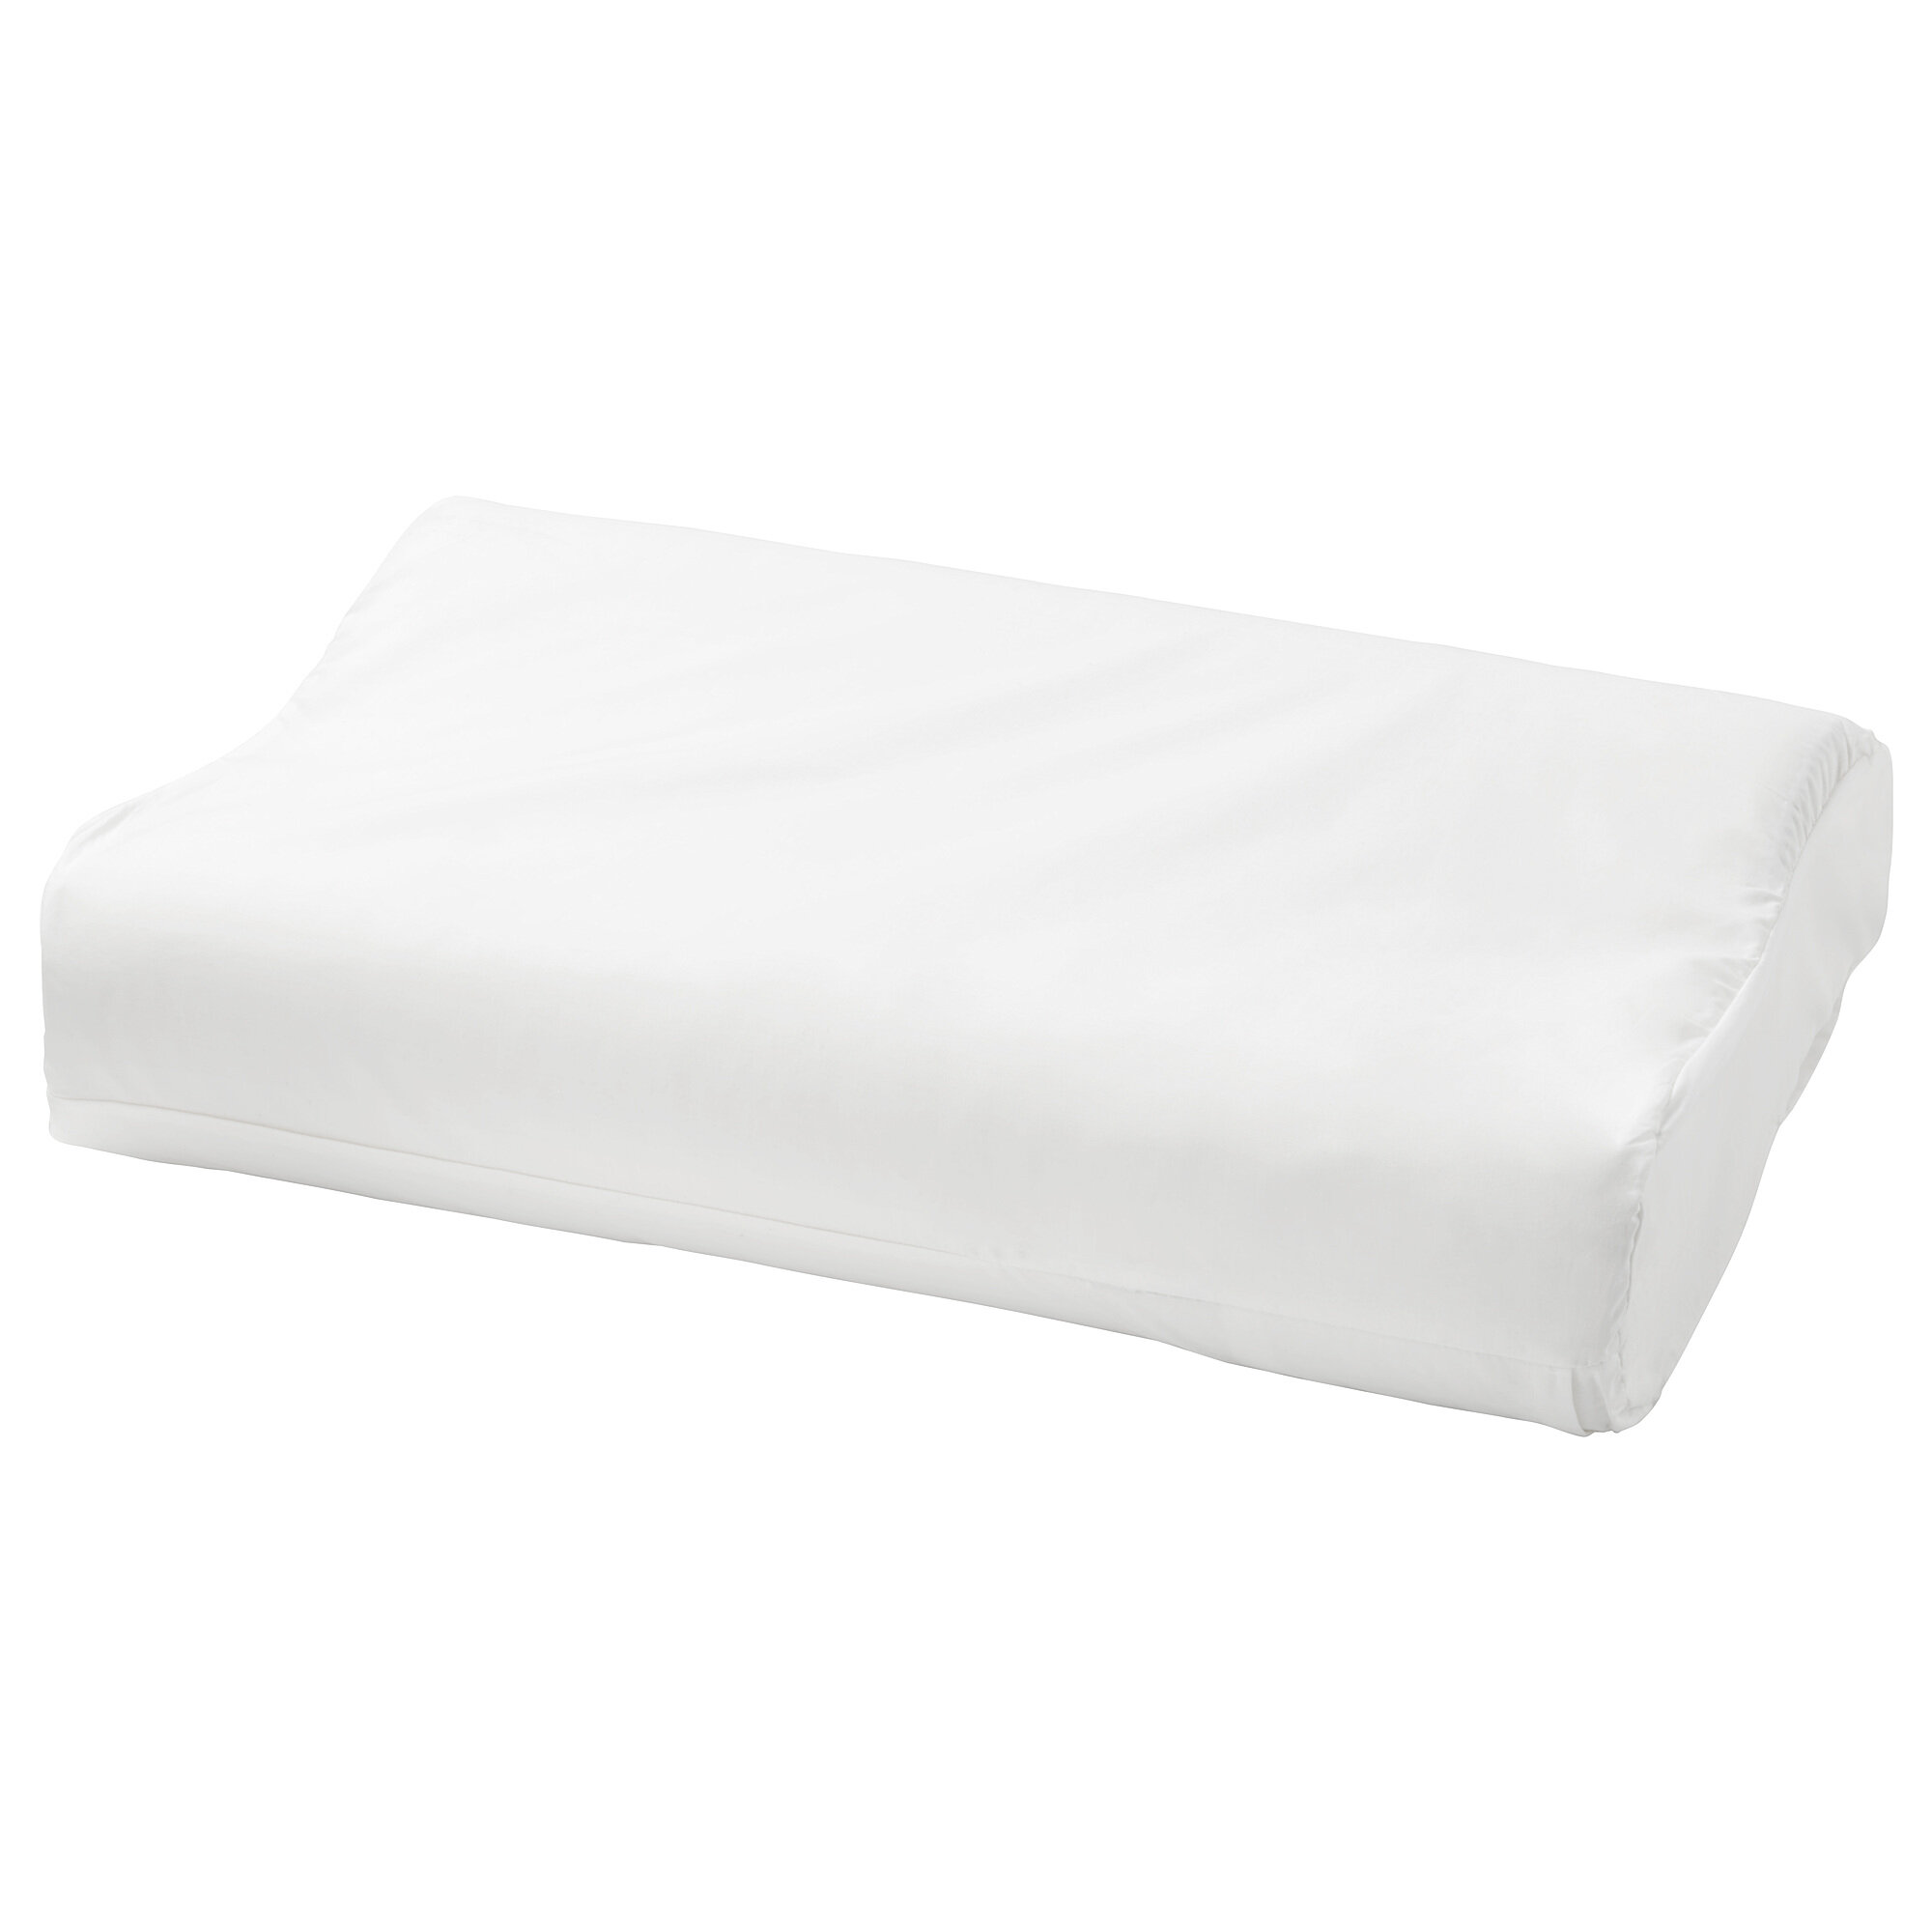 Чехол (наволочка) для подушки икеа розенскэрм, 104.443.70, 33 х 50 см, высота 12 см (IKEA ROSENSKARM)